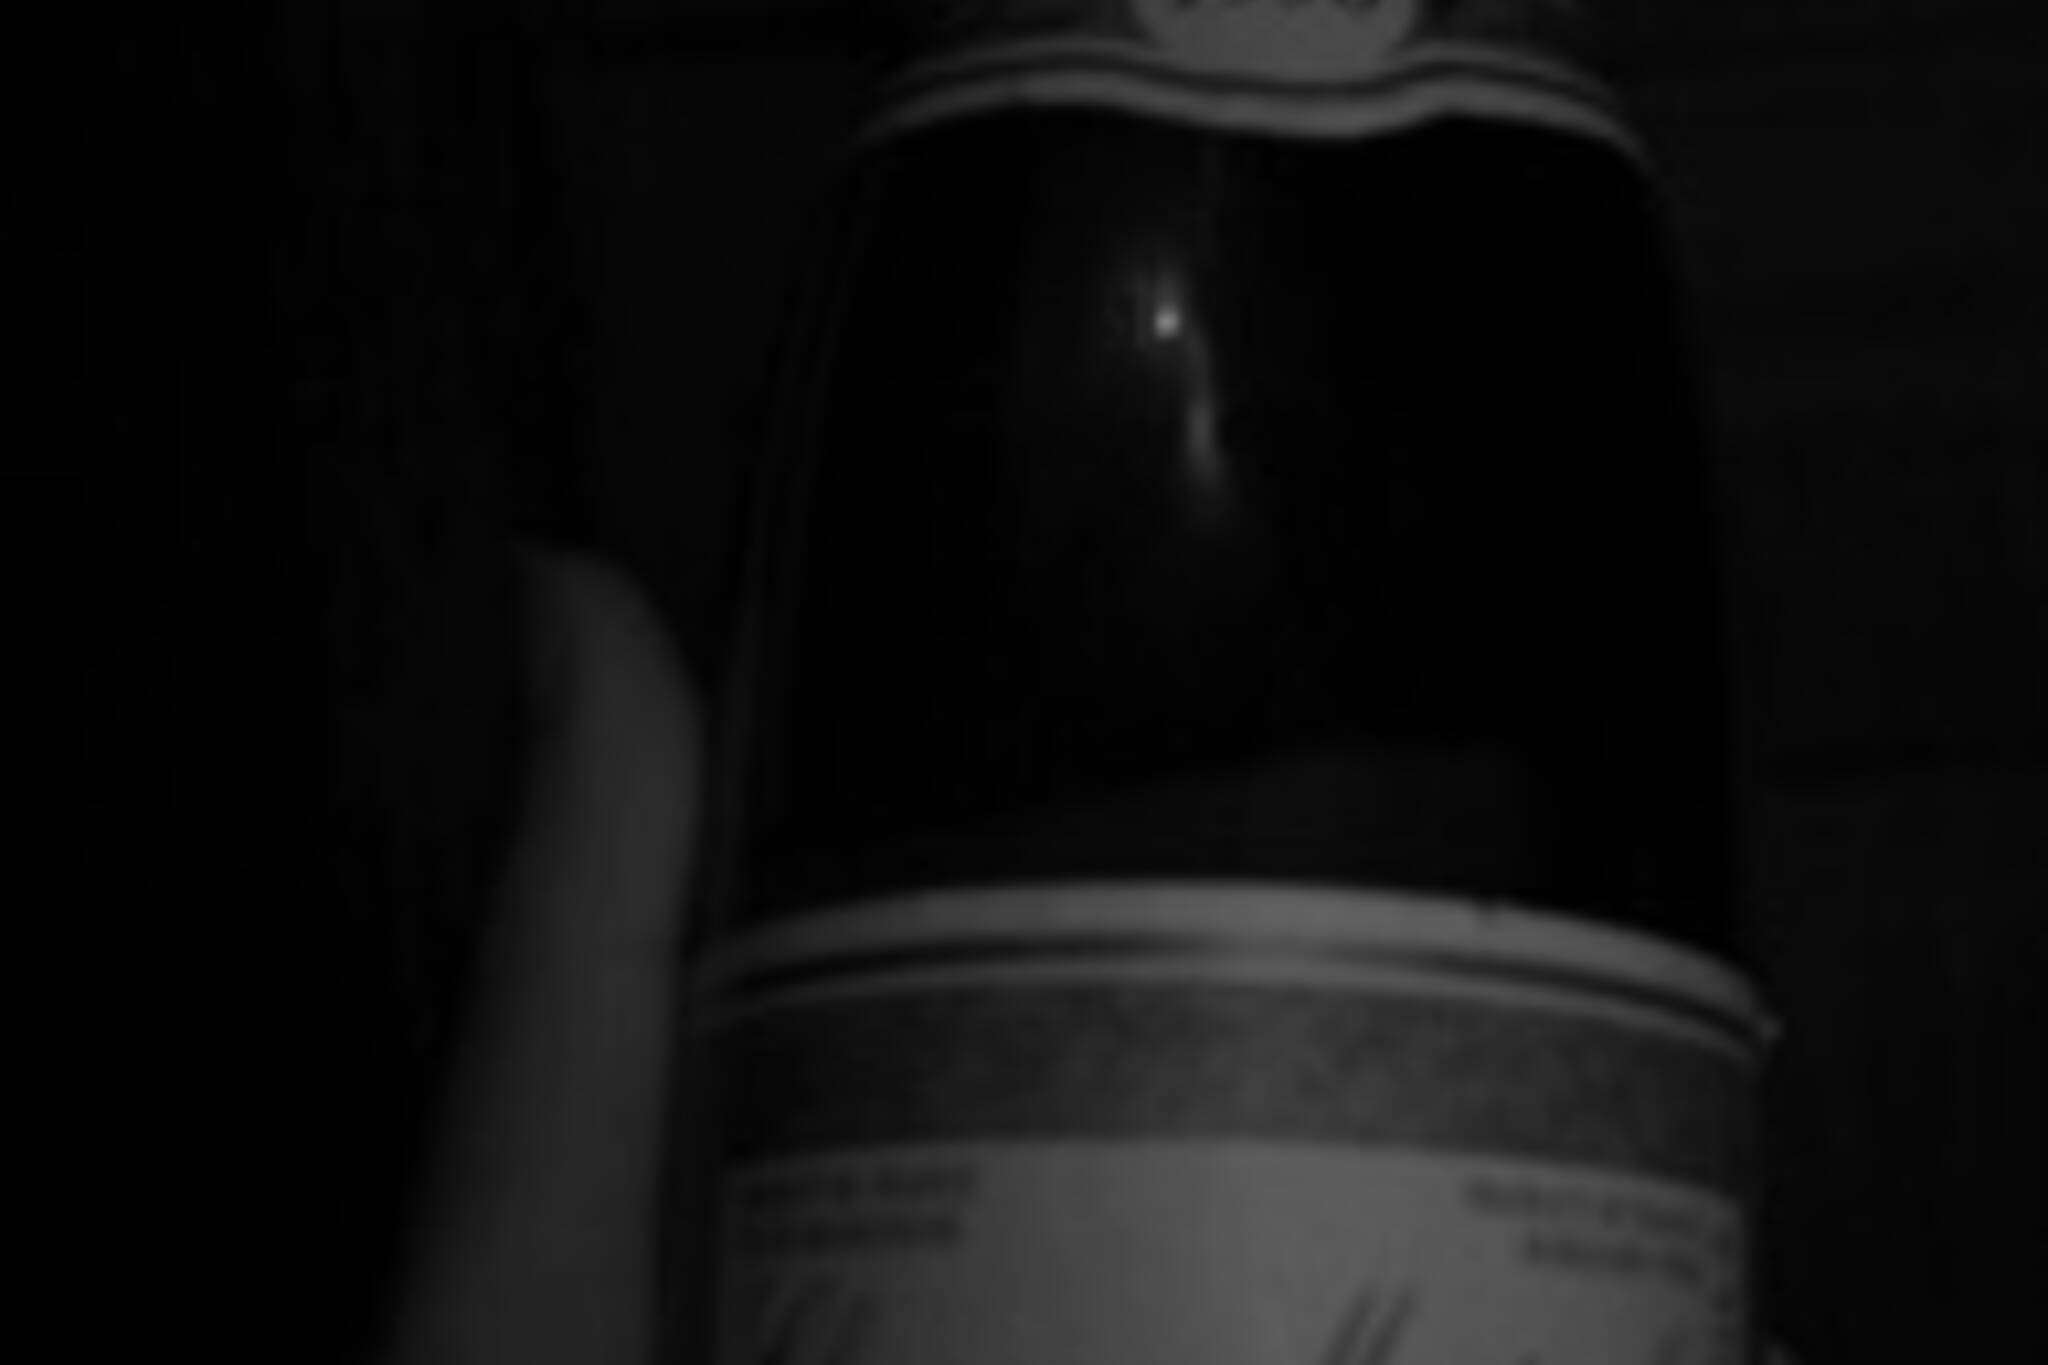 My found treasure: A bottle of Charton Trebuchet Chassagne Montrachet Premier Cru 1990